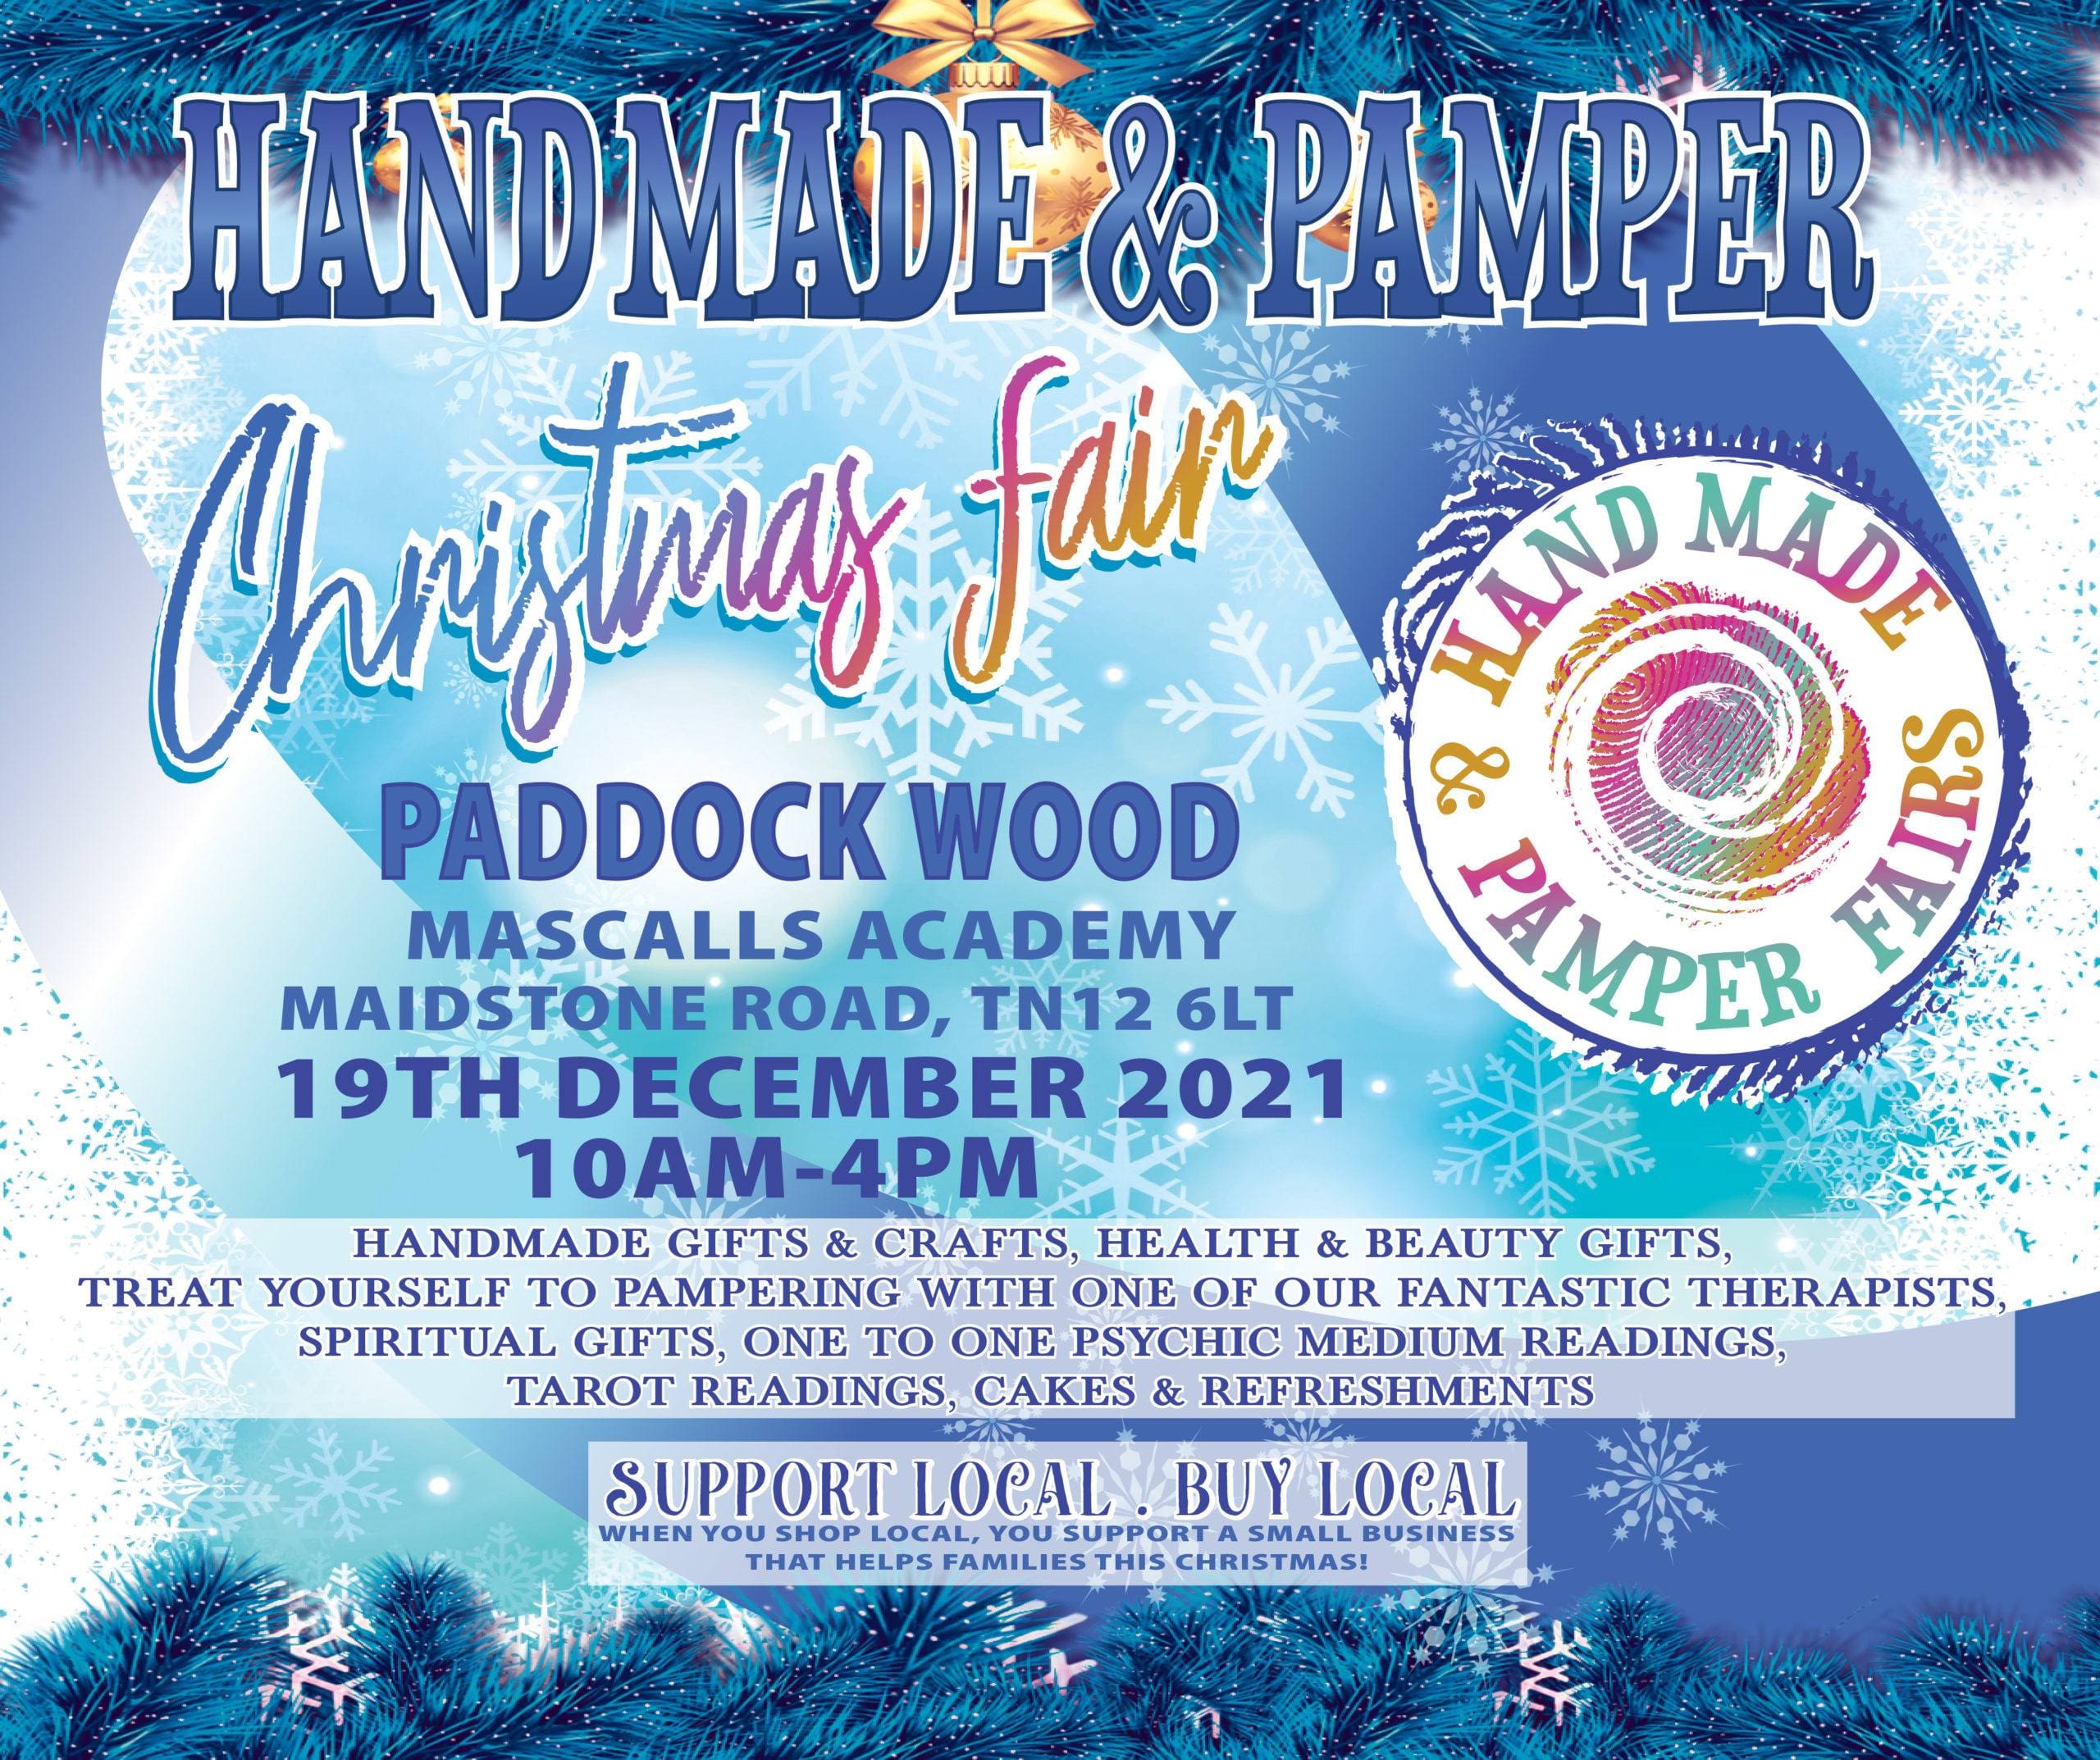 Christmas Fair Paddock Wood 2021